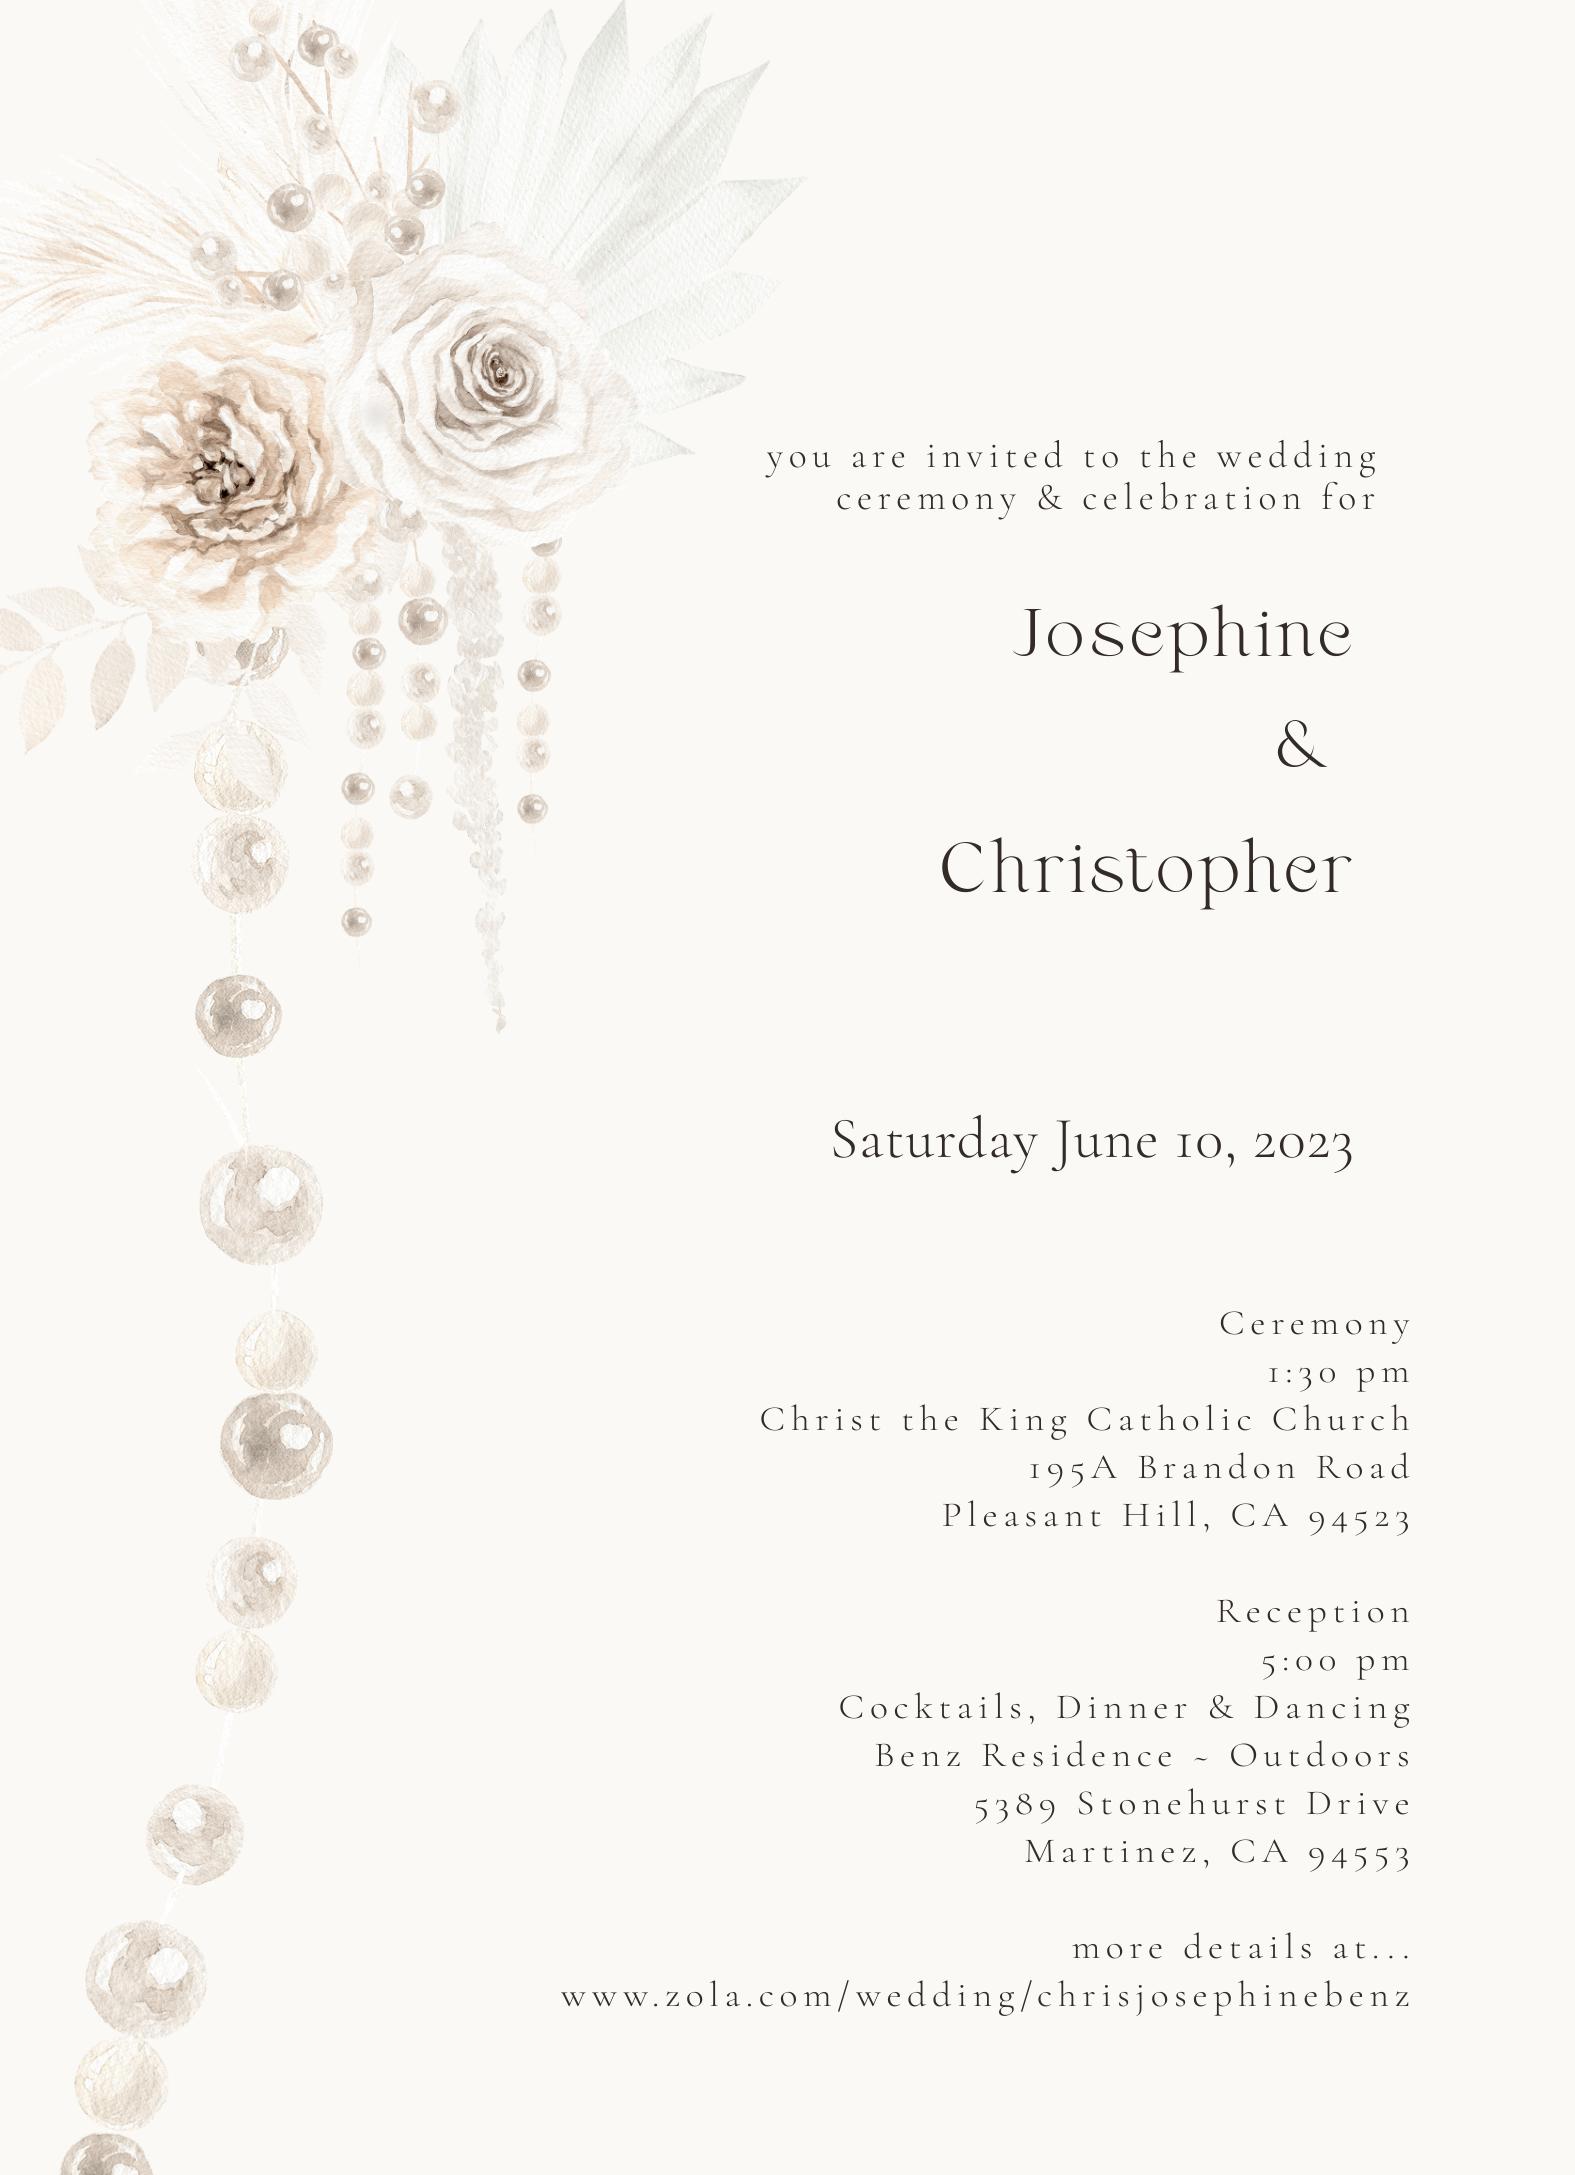 The Wedding Website of Josephine Benz and Christopher Benz